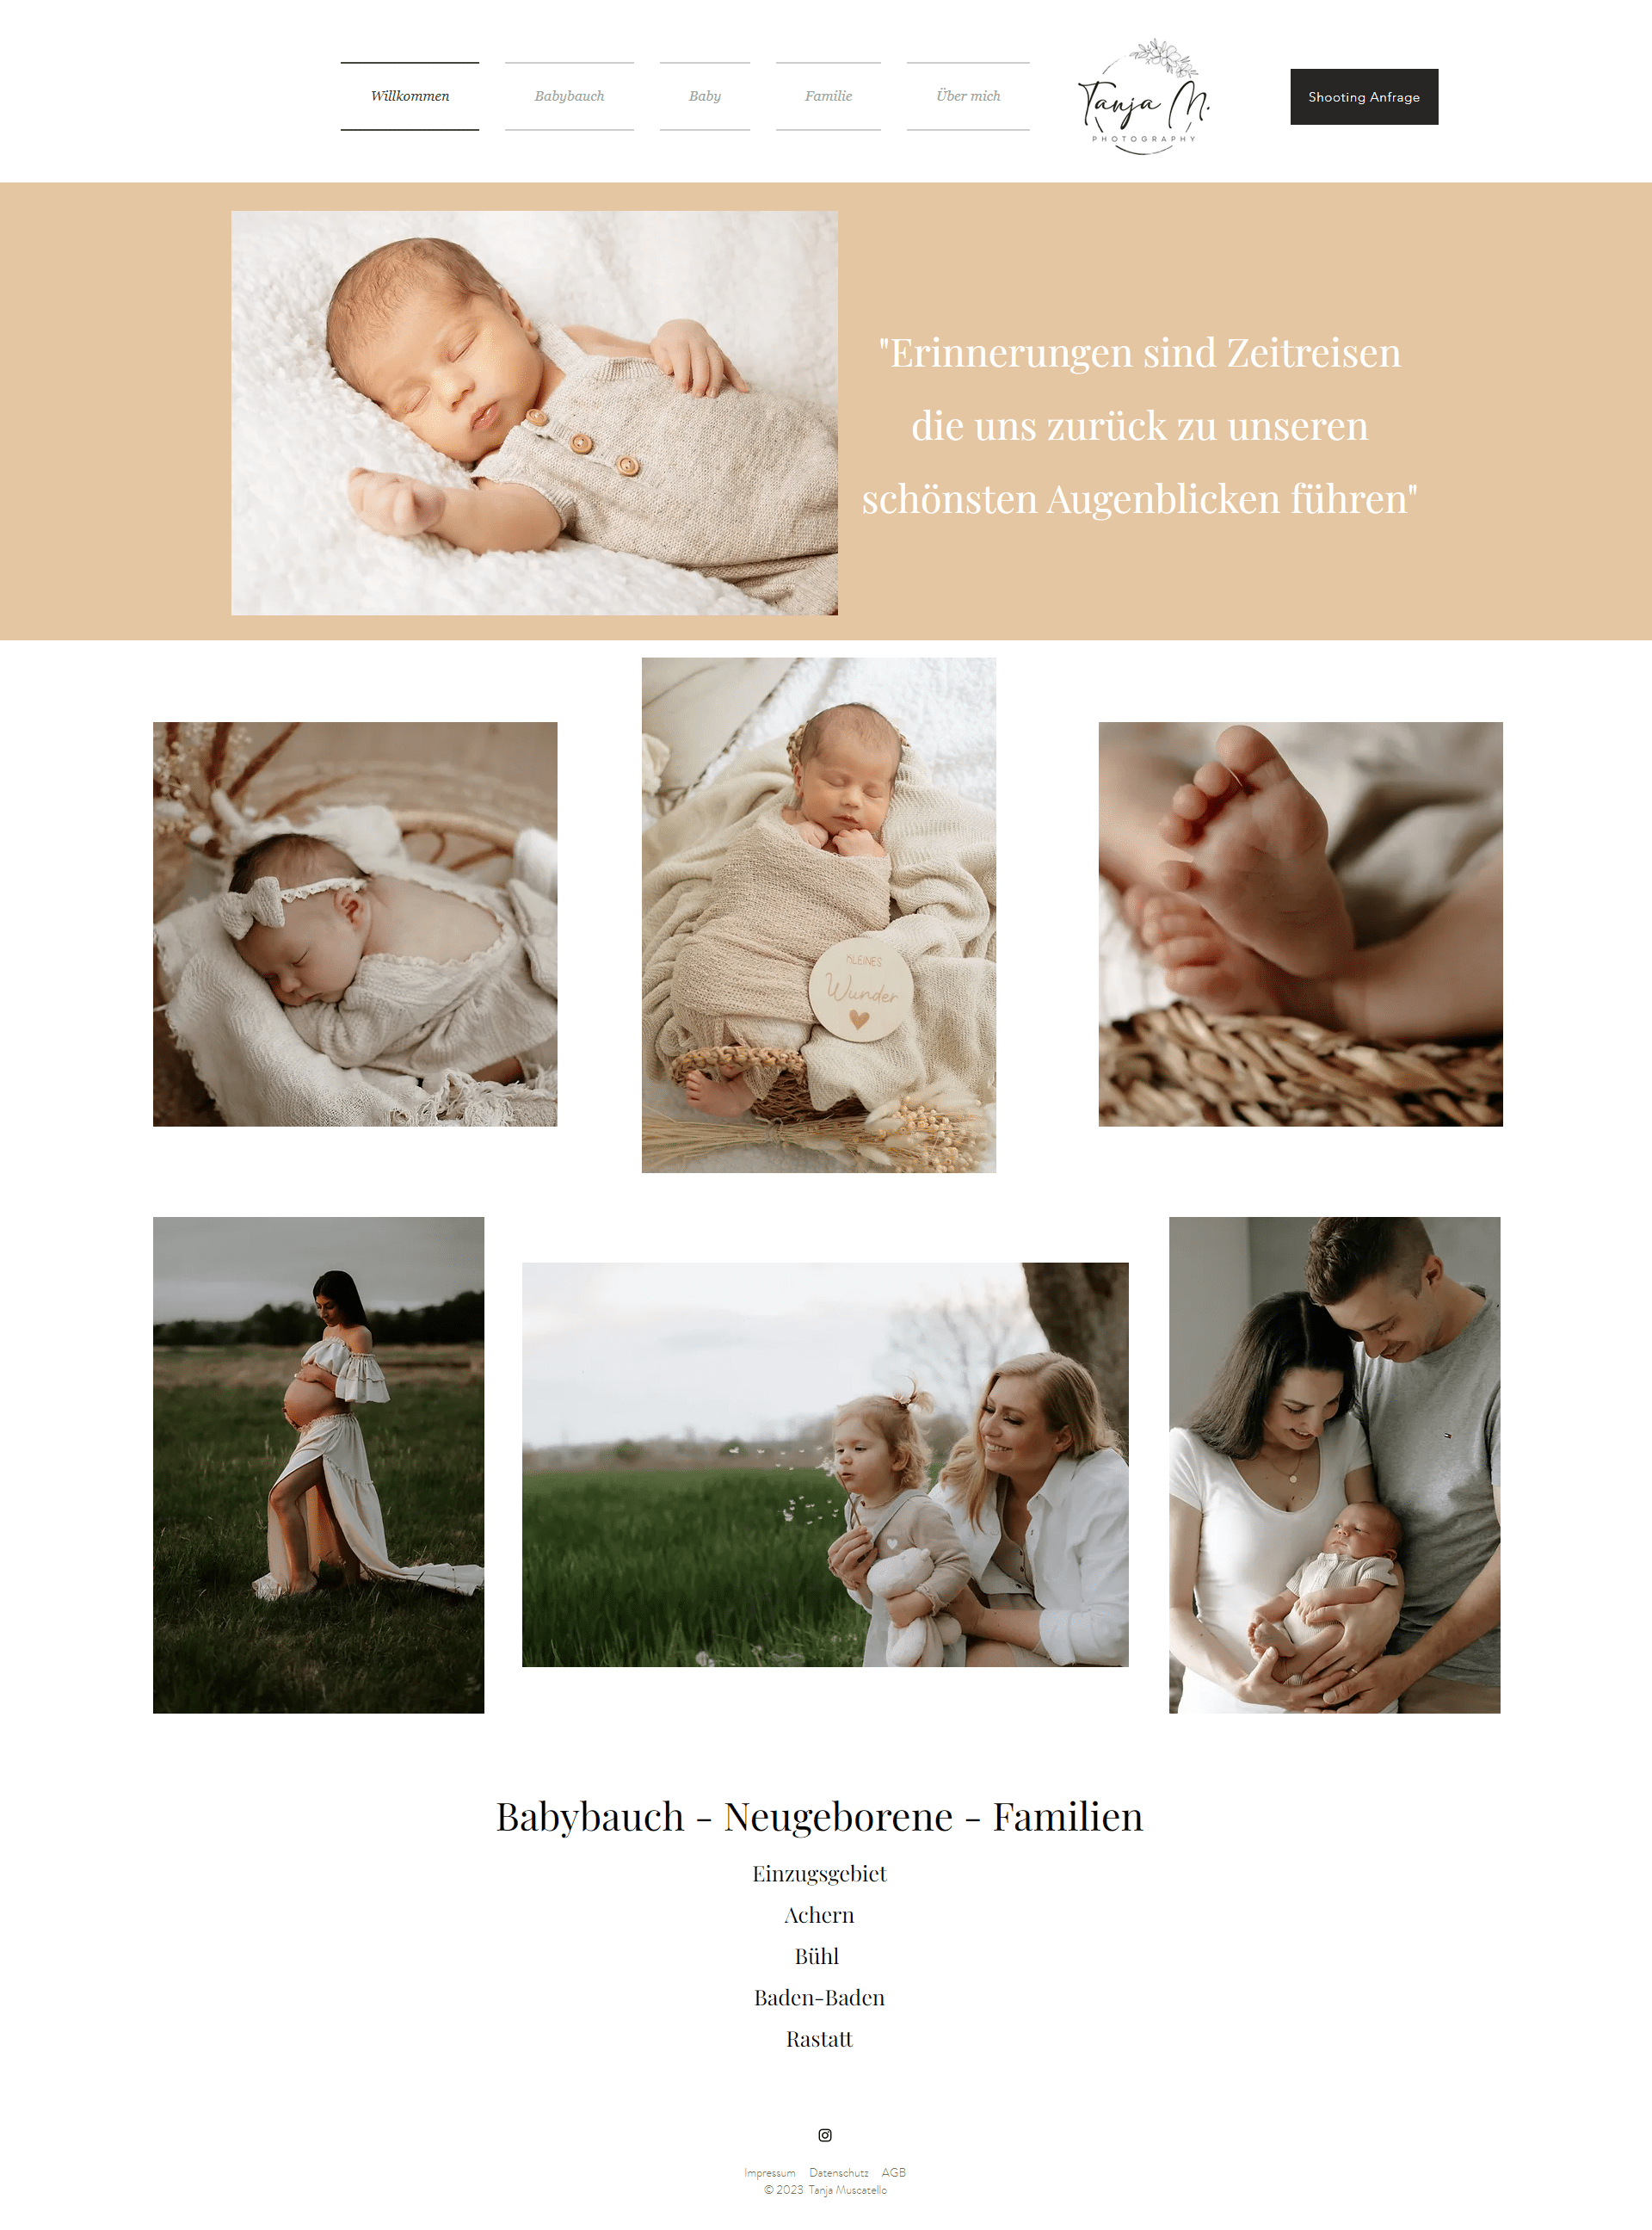 Website Design Fotografin Tanja aus Bühl, Baden-Baden. Familienfotografie, Neugeborenenfotografie, Schwangerfotografie. Fotografie für Familien und Neugeborene